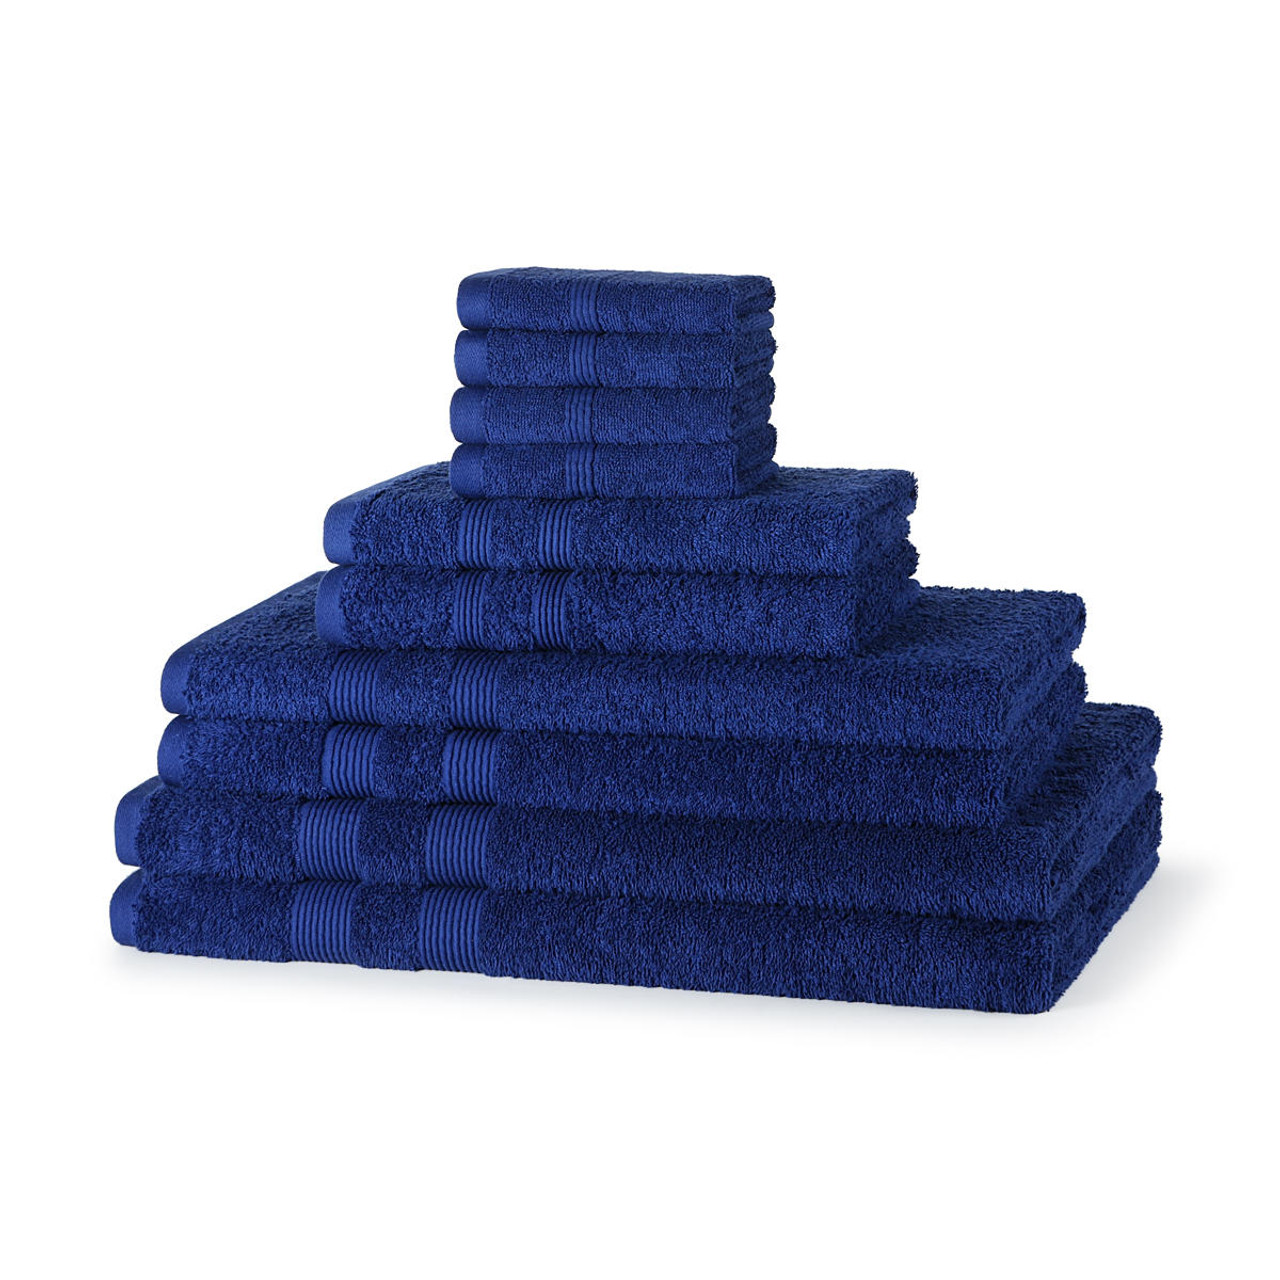 2 Bath Towels 4 Face Cloths Navy 4 Hand Towels Daily Use Towels X11 Homeware Bale Towel Set 10 piece 